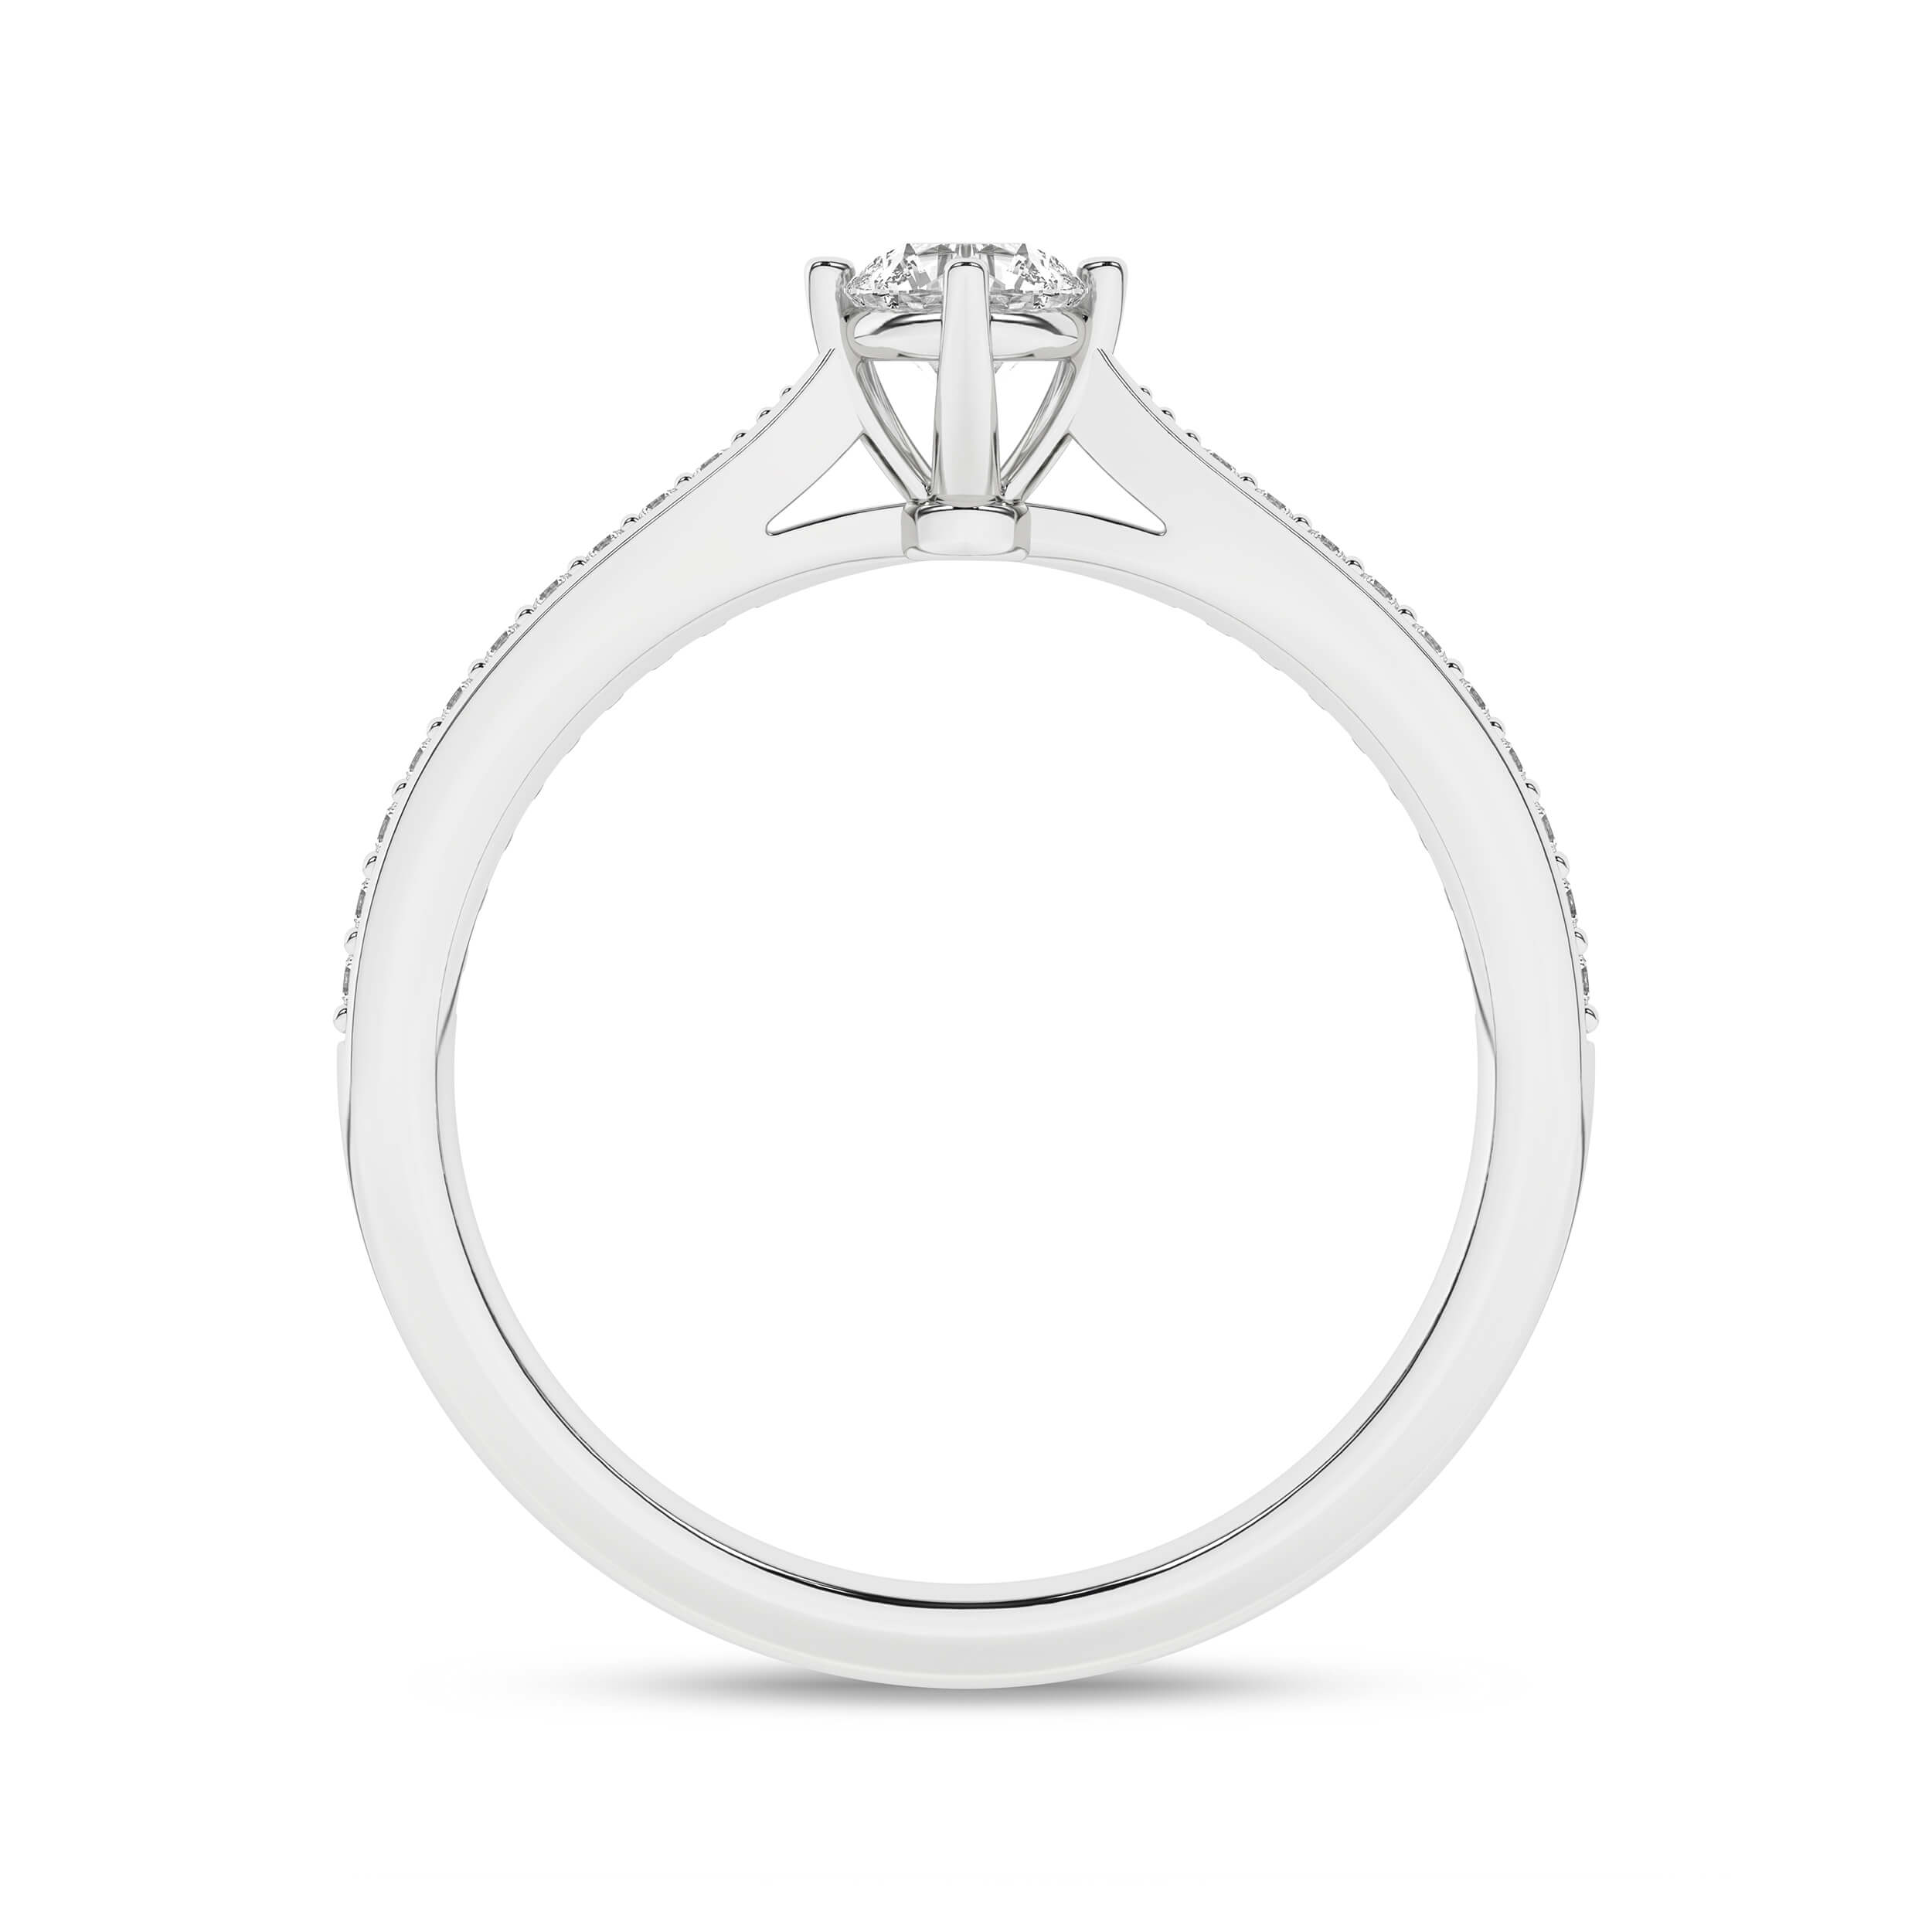 Inel de logodna din Aur Alb 14K cu Diamante 0.33Ct, articol RB17648EG, previzualizare foto 3